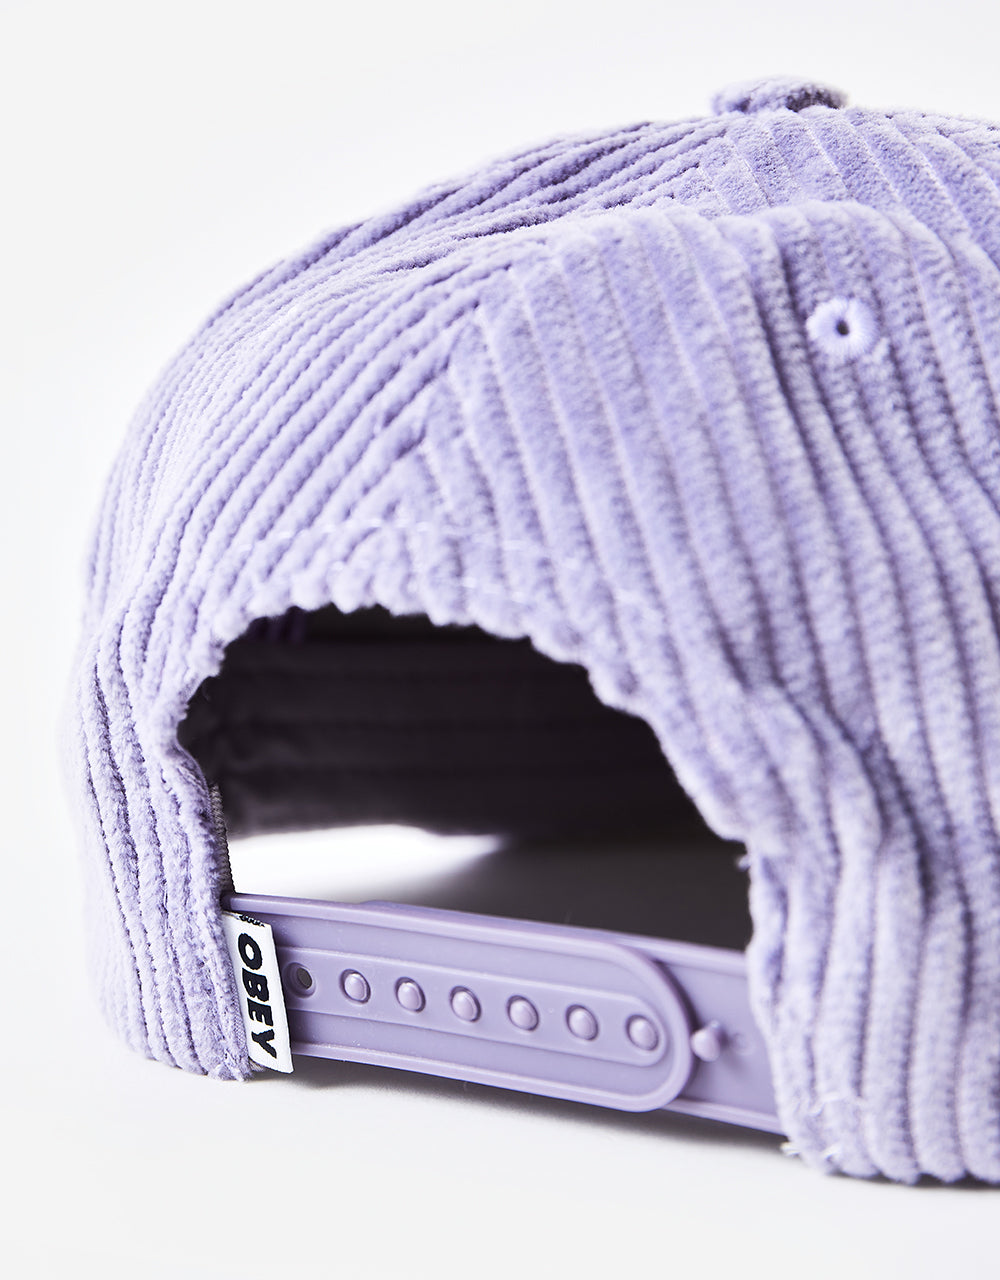 Obey Cord Snapback Cap - Purple Paste